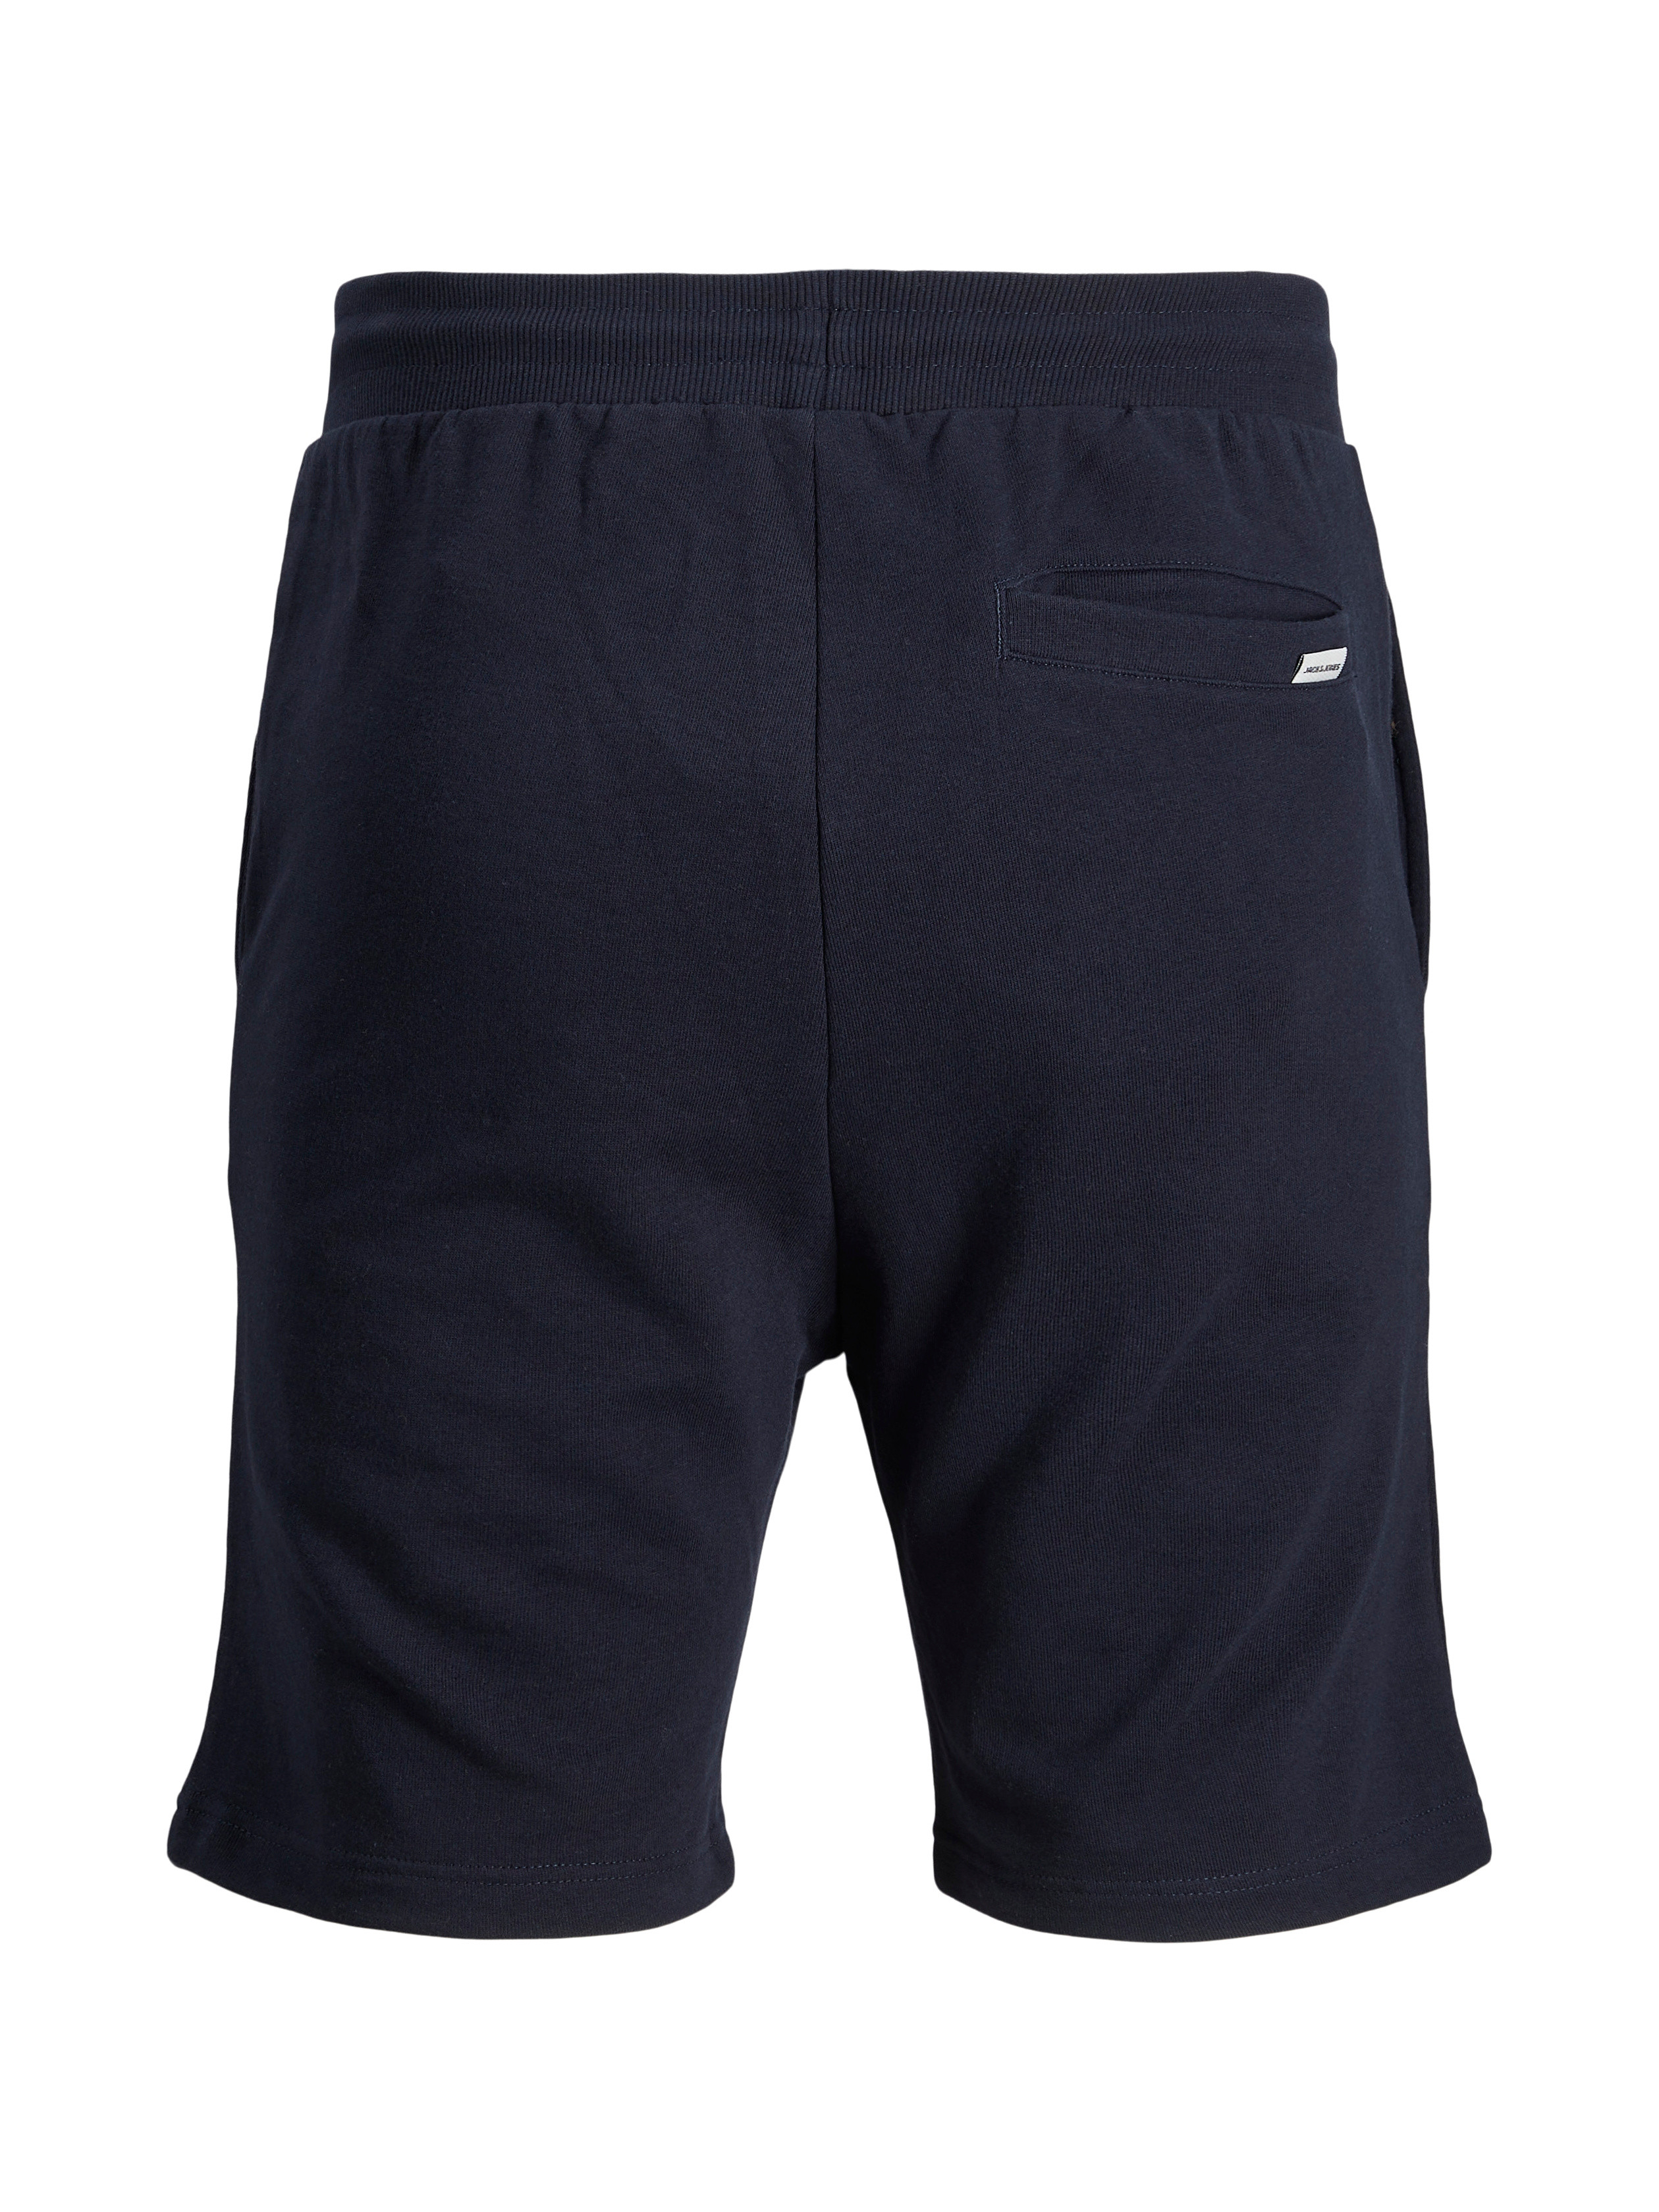 Shorts, Dark Blue, large image number 1